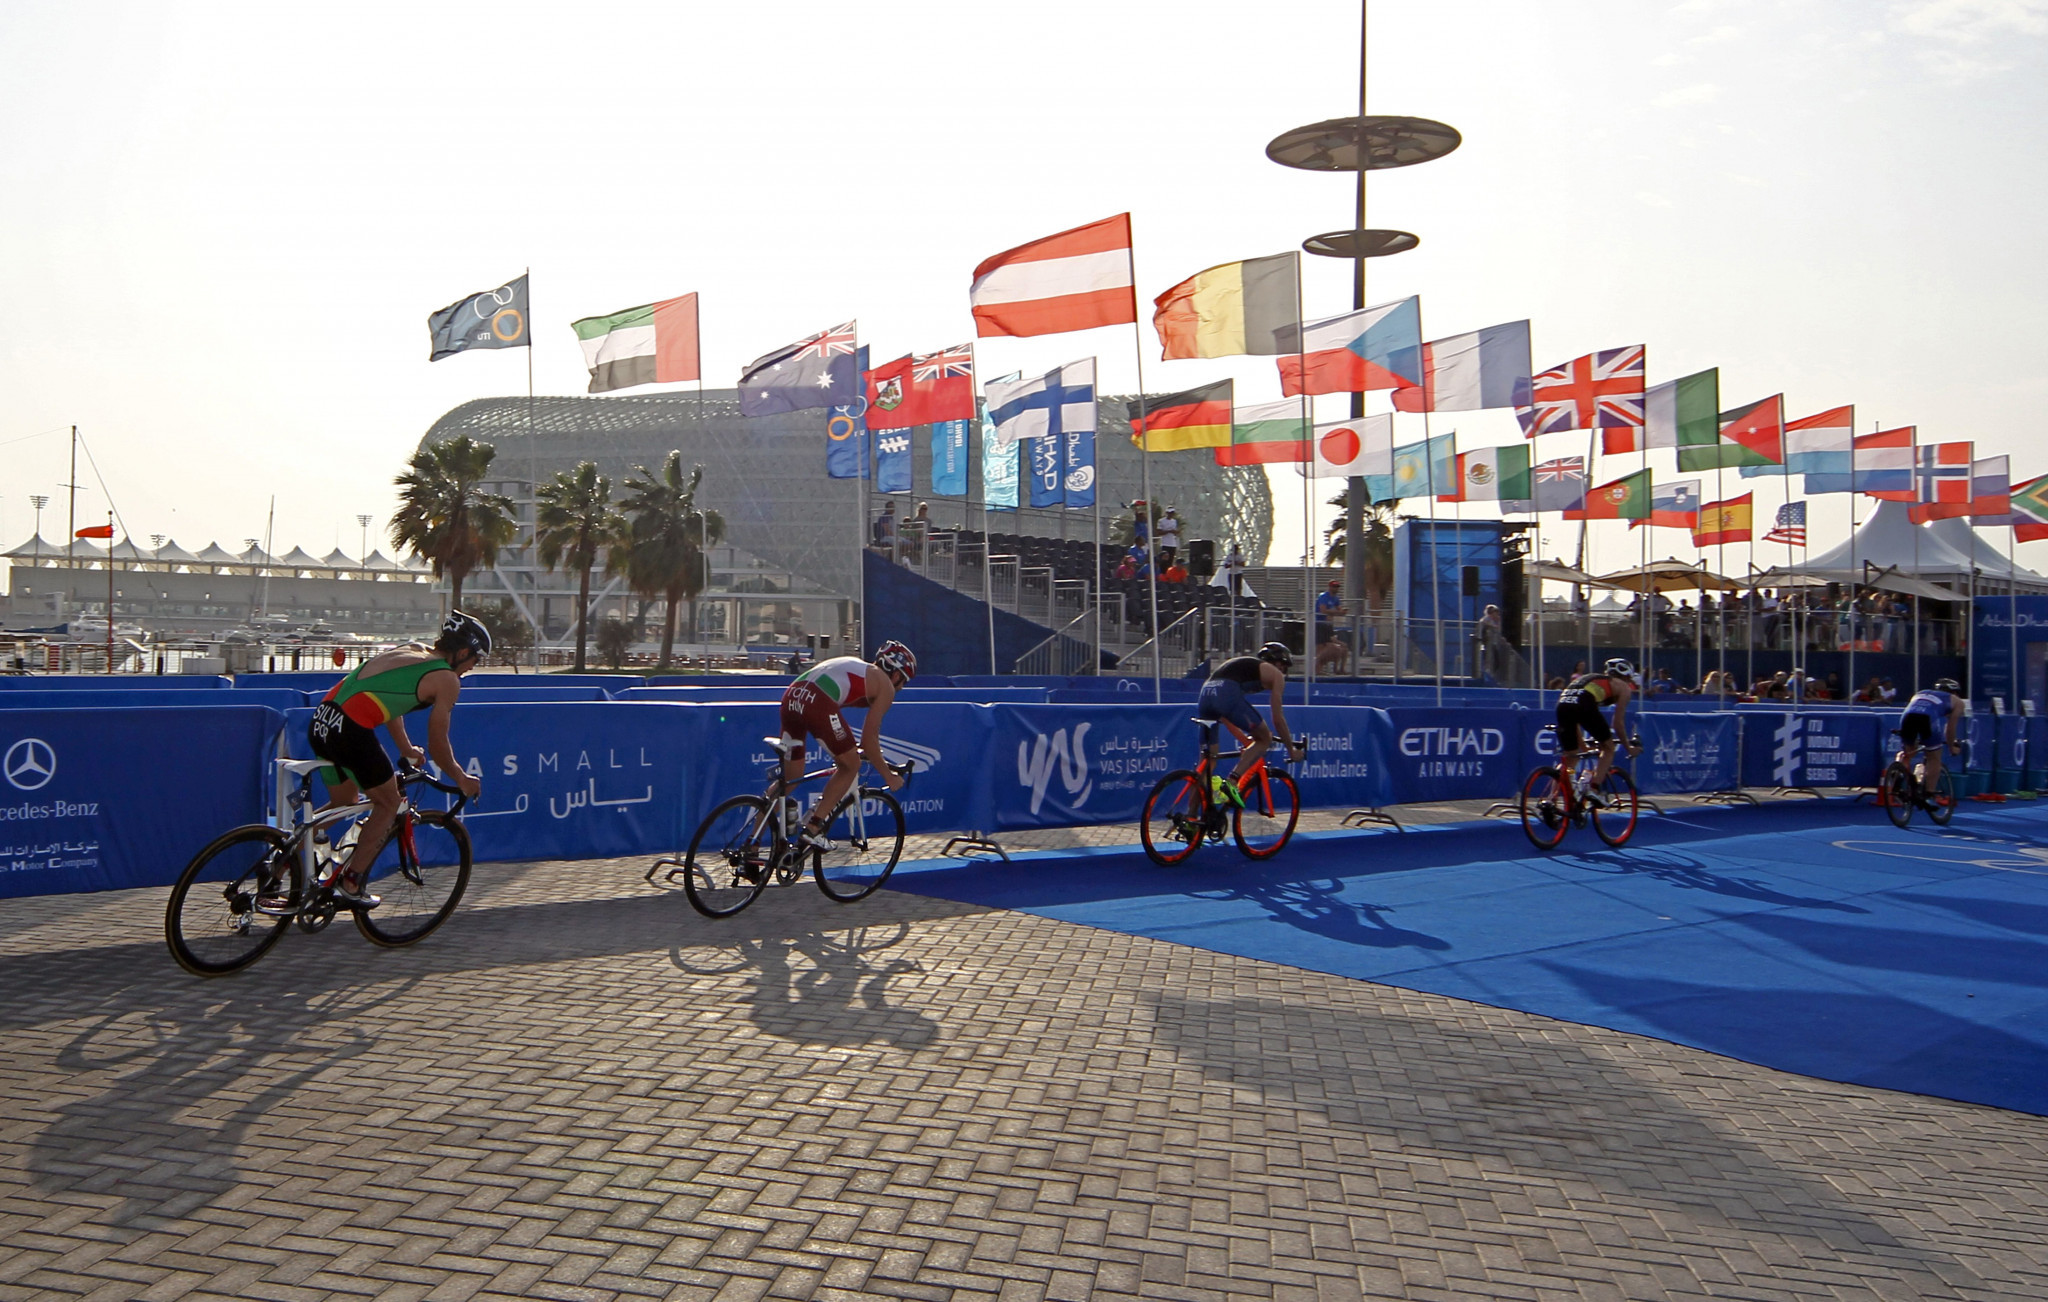 Abu Dhabi has usually opened the World Triathlon season ©Getty Images